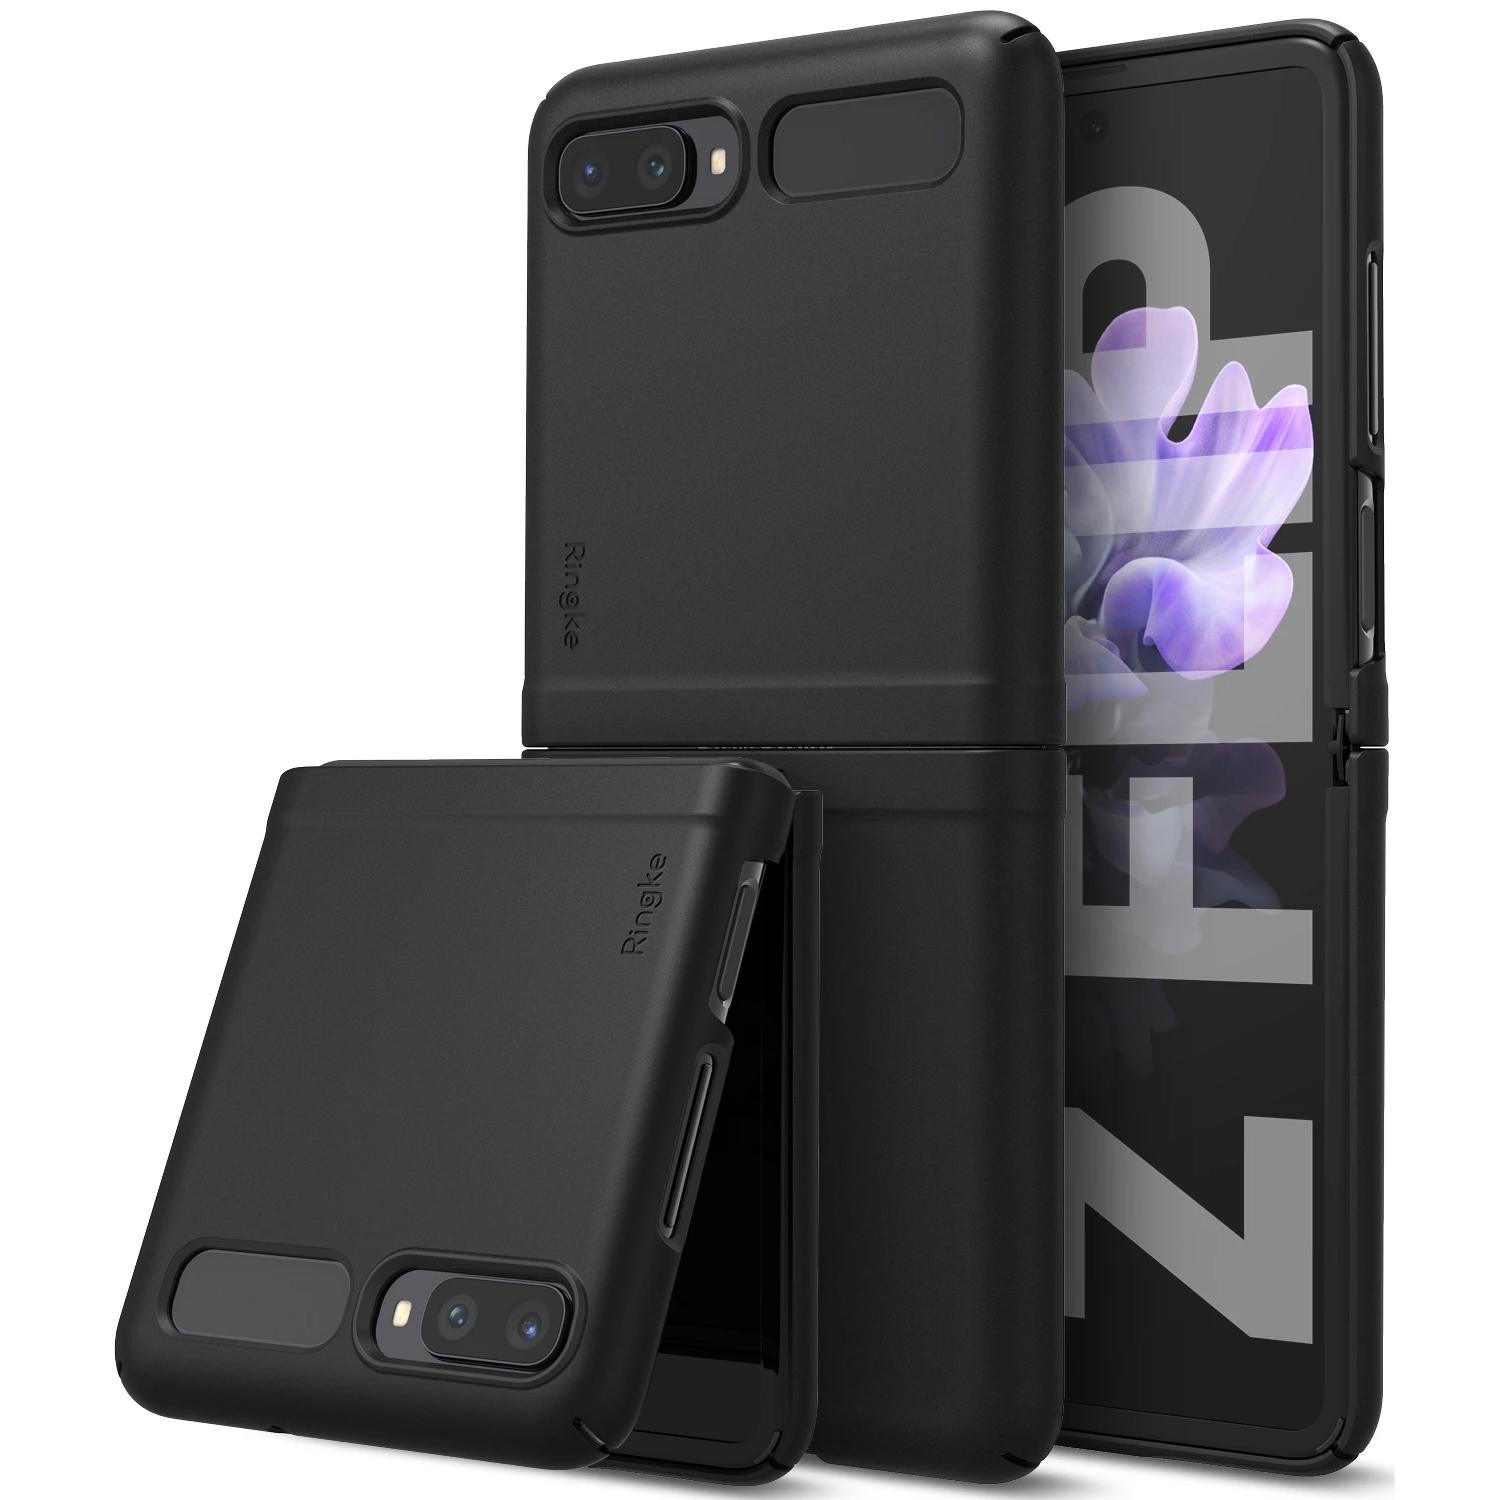 Slim Case Galaxy Z Flip Black